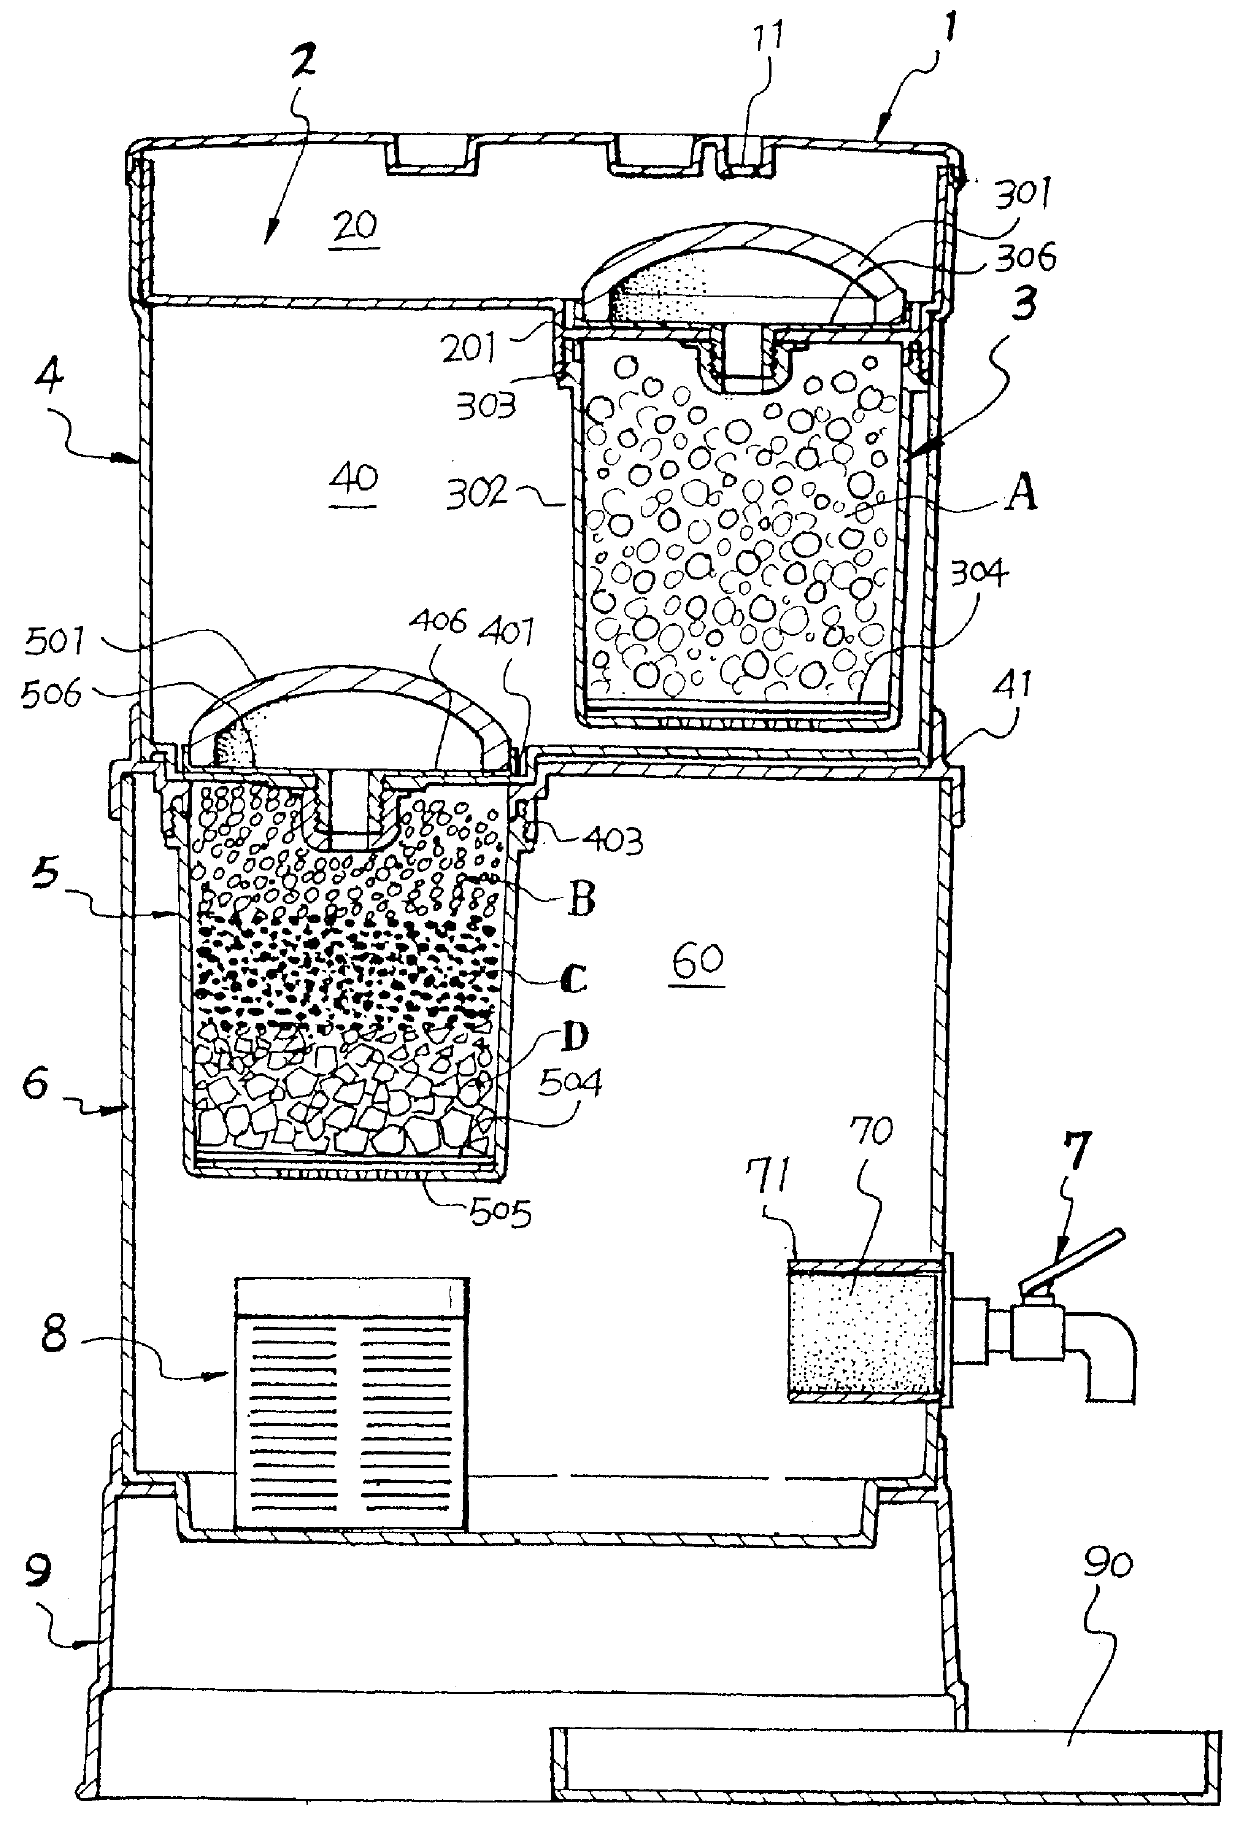 Mineral filtering apparatus